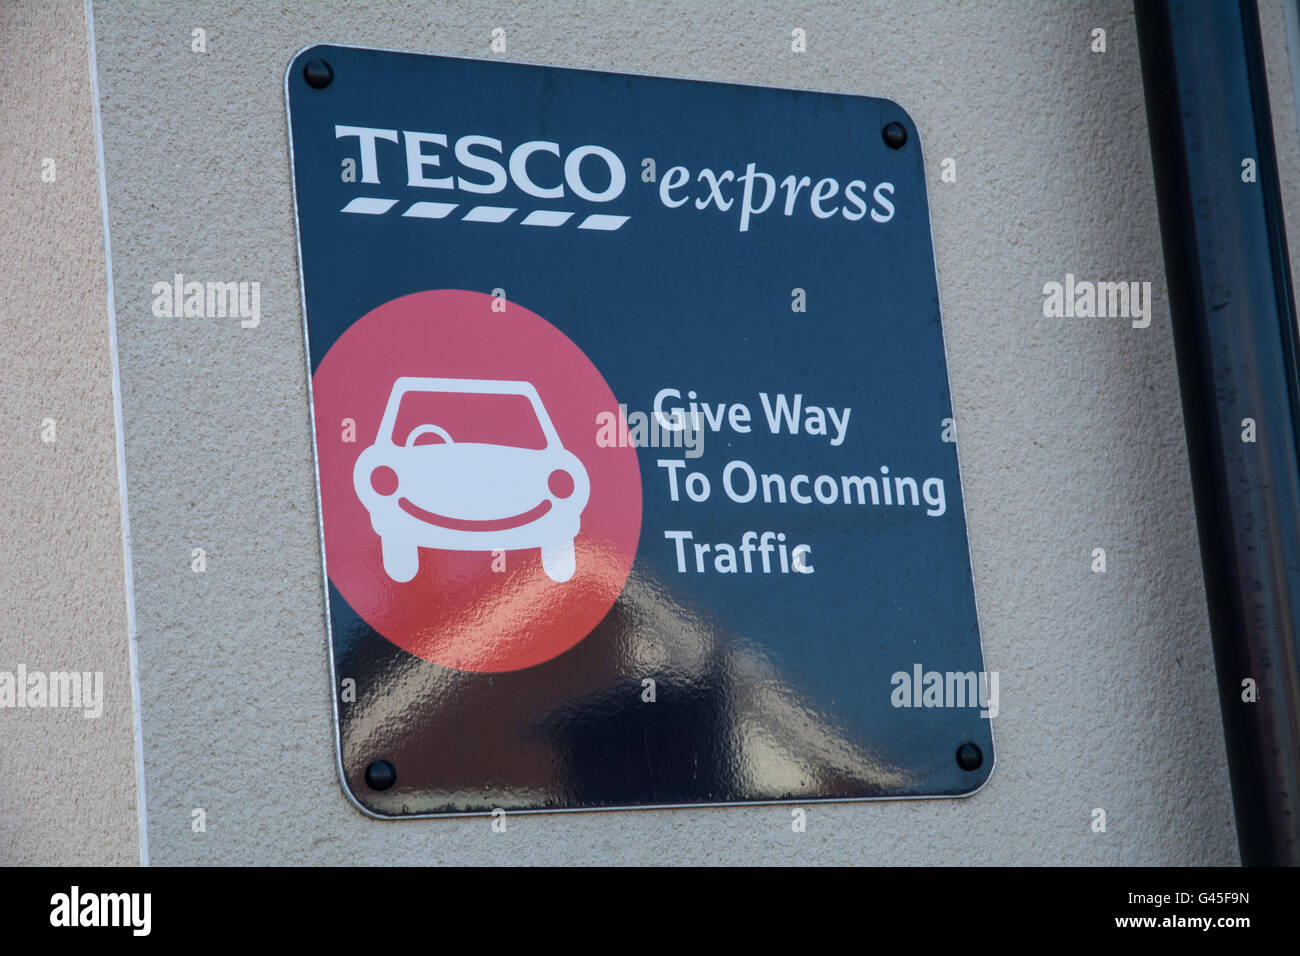 A Tesco express give way sign. Stock Photo